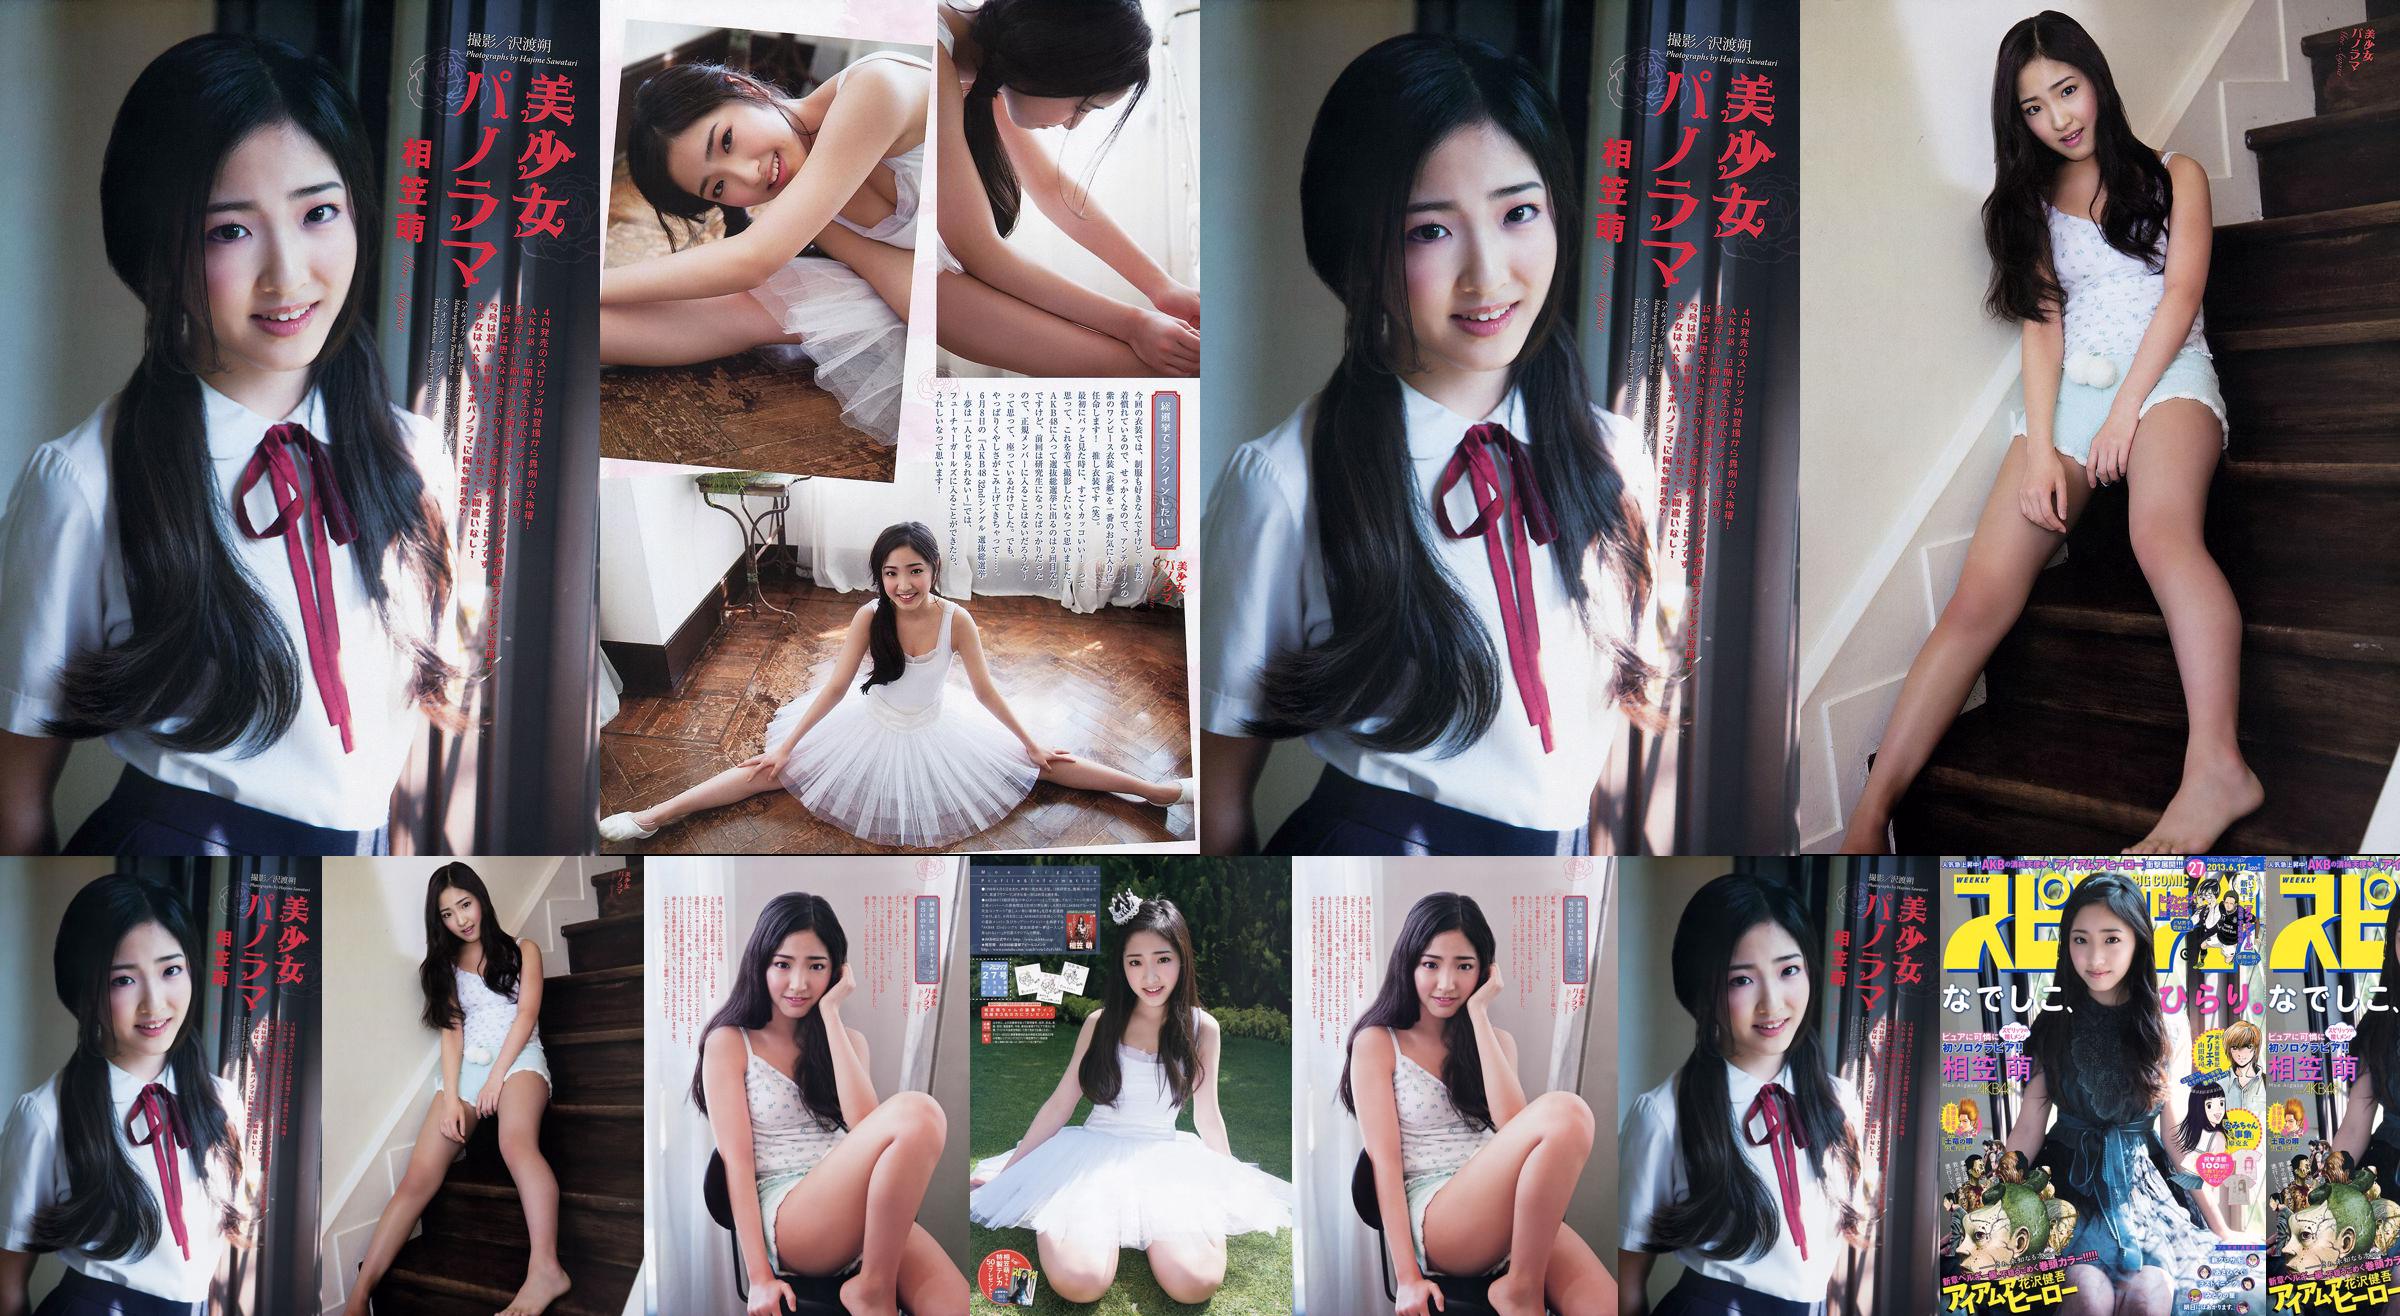 [Grands esprits de la bande dessinée hebdomadaire] Aikasa Moe 2013 n ° 27 Magazine photo No.22e3dc Page 1